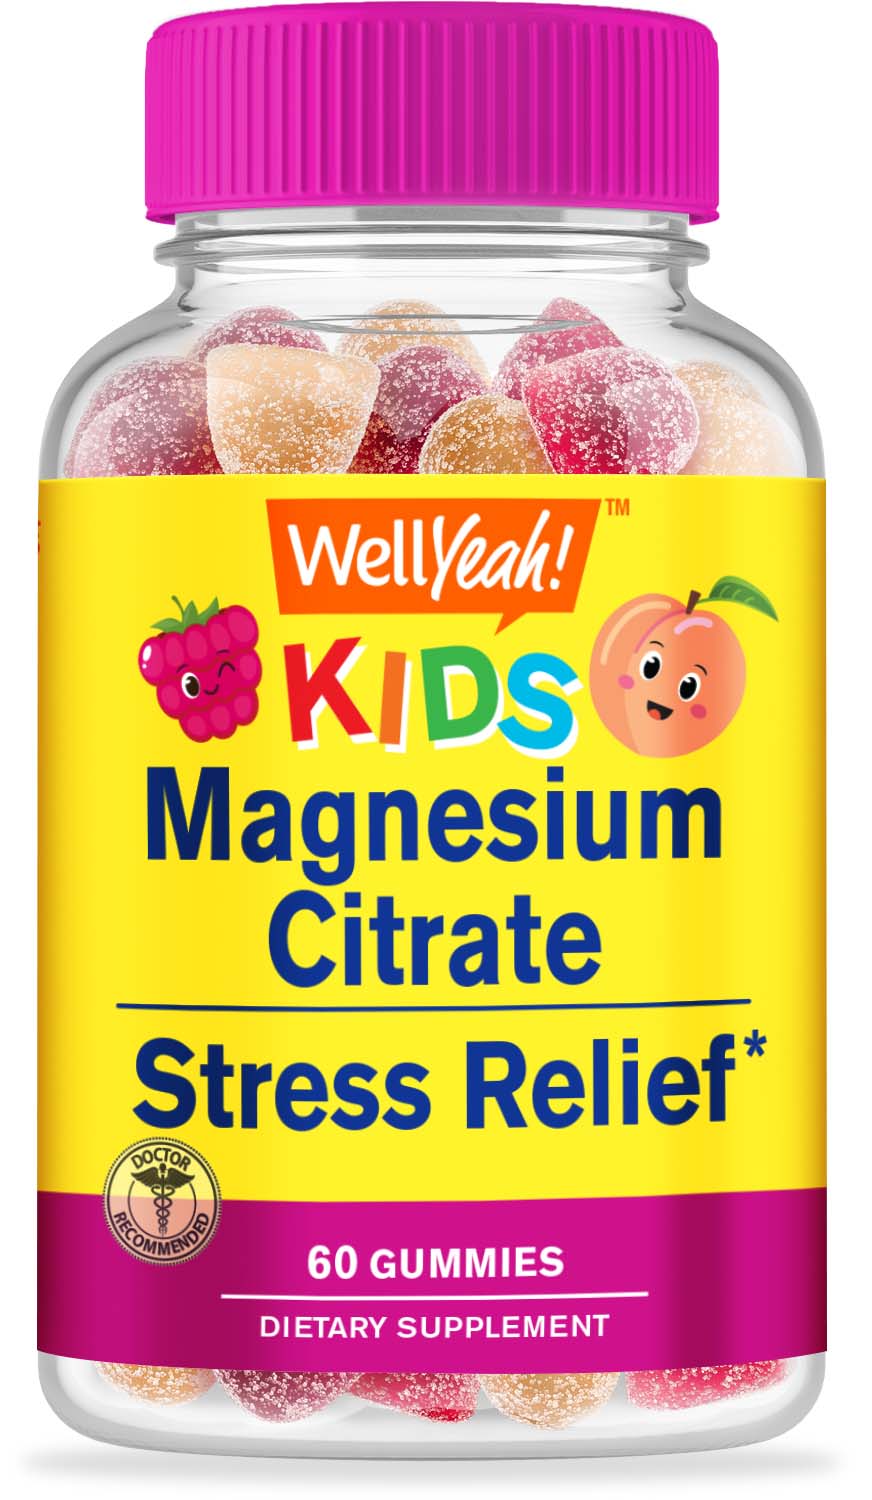 6 in 1 Stress Relief Gummies